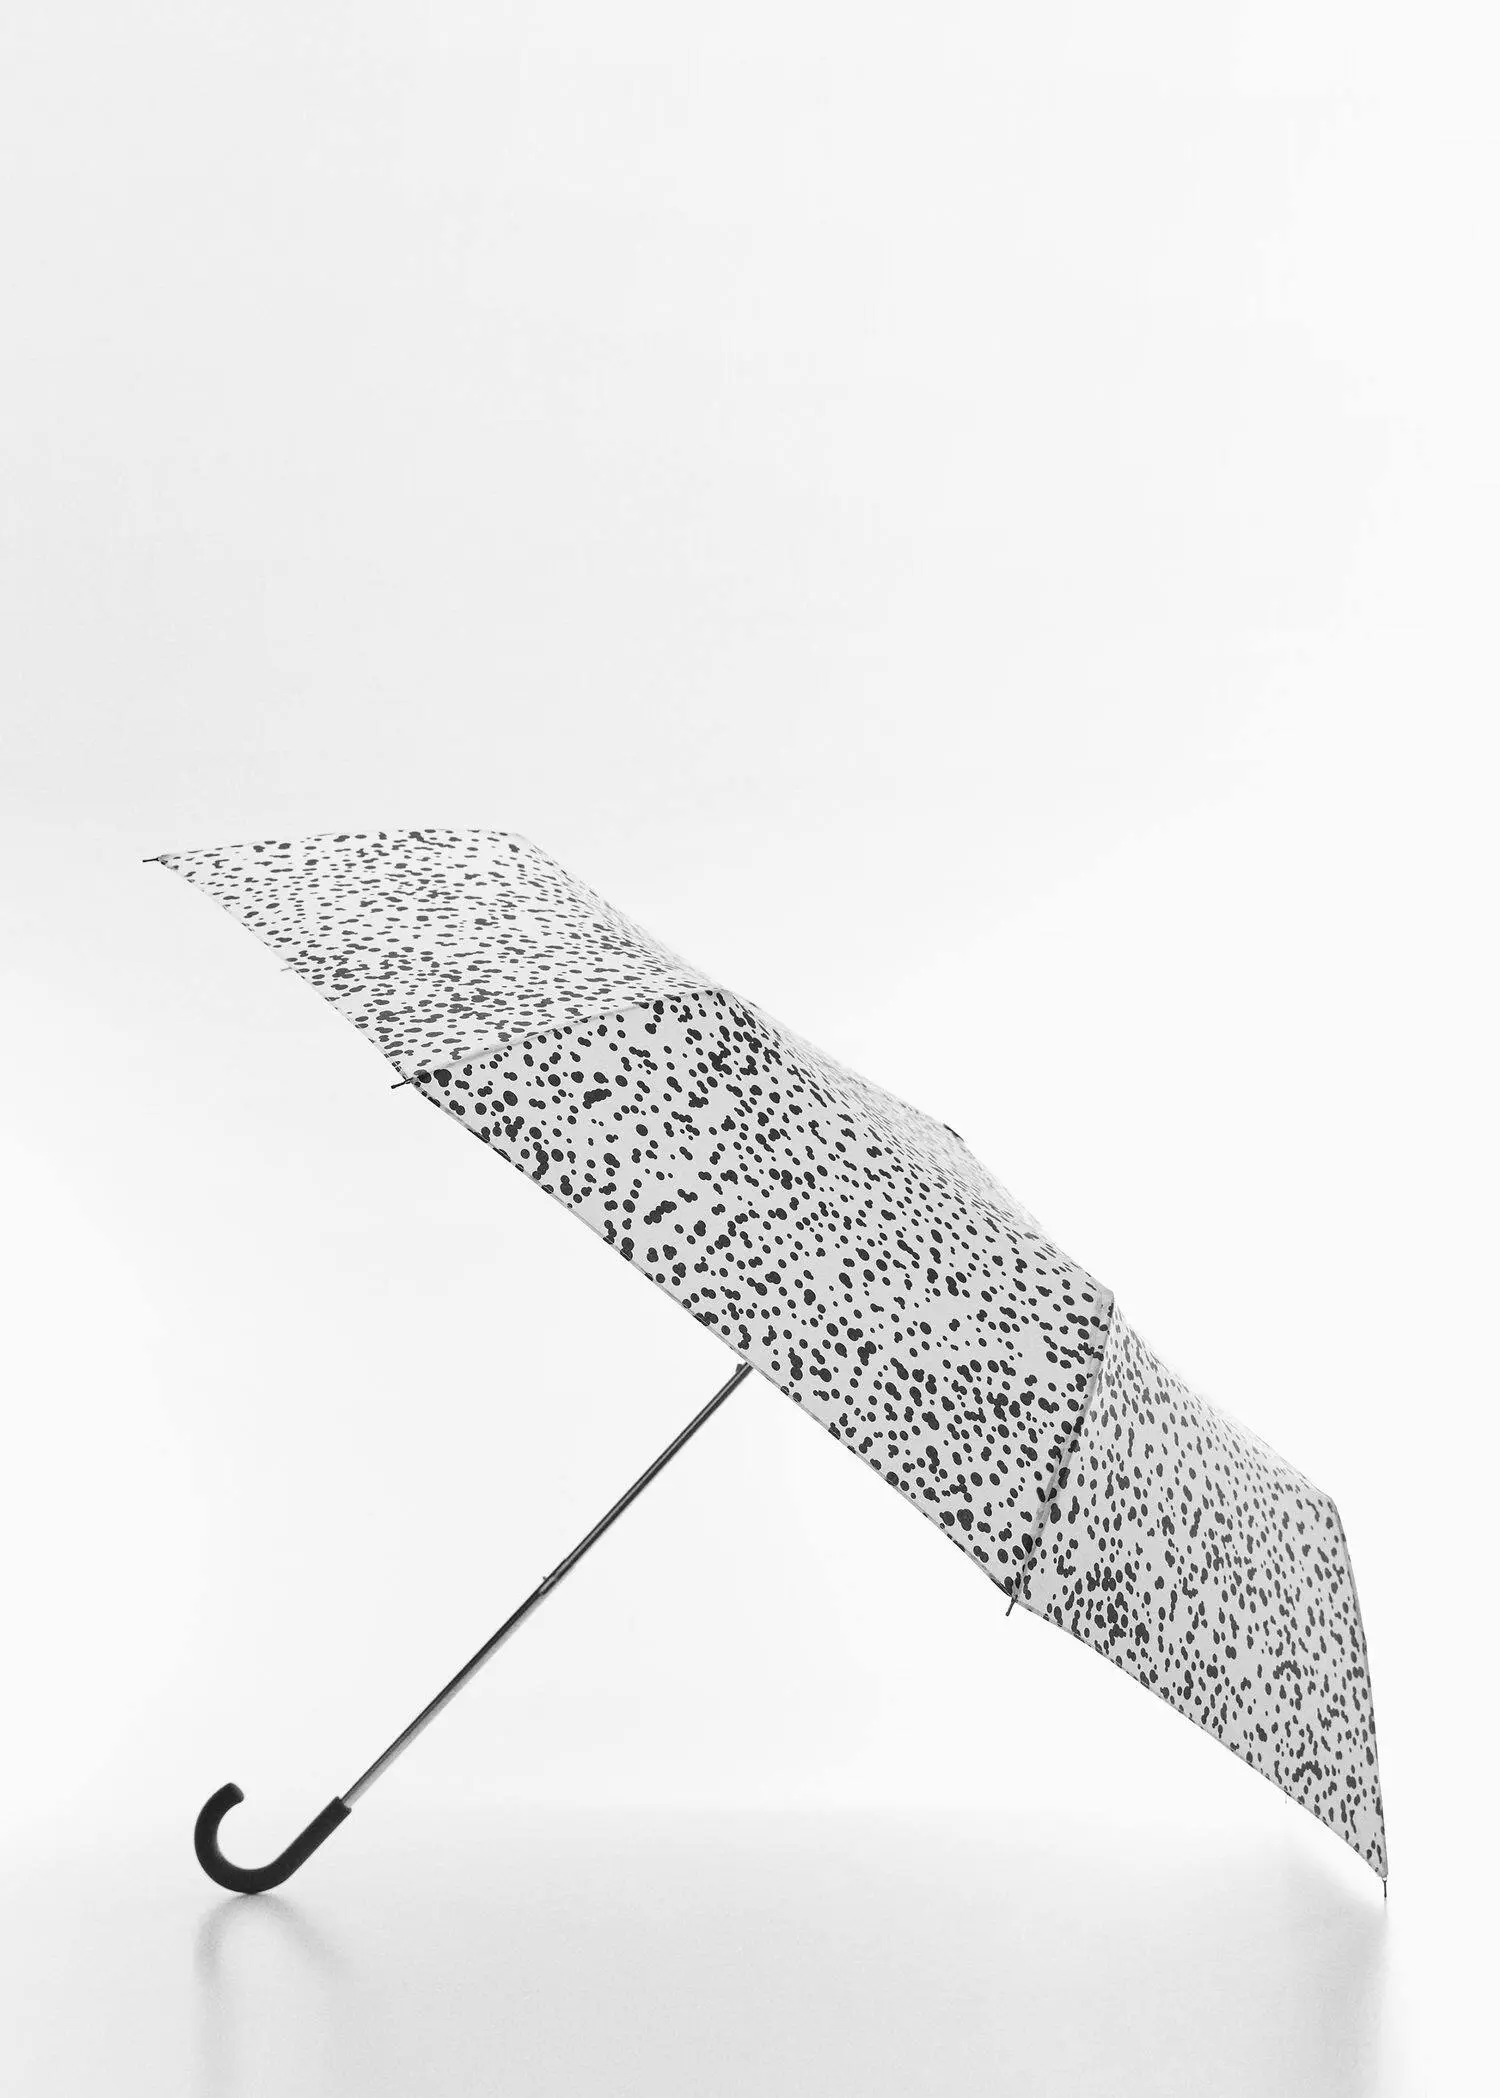 Mango Print folding umbrella. an umbrella is open in the sky on a sunny day. 